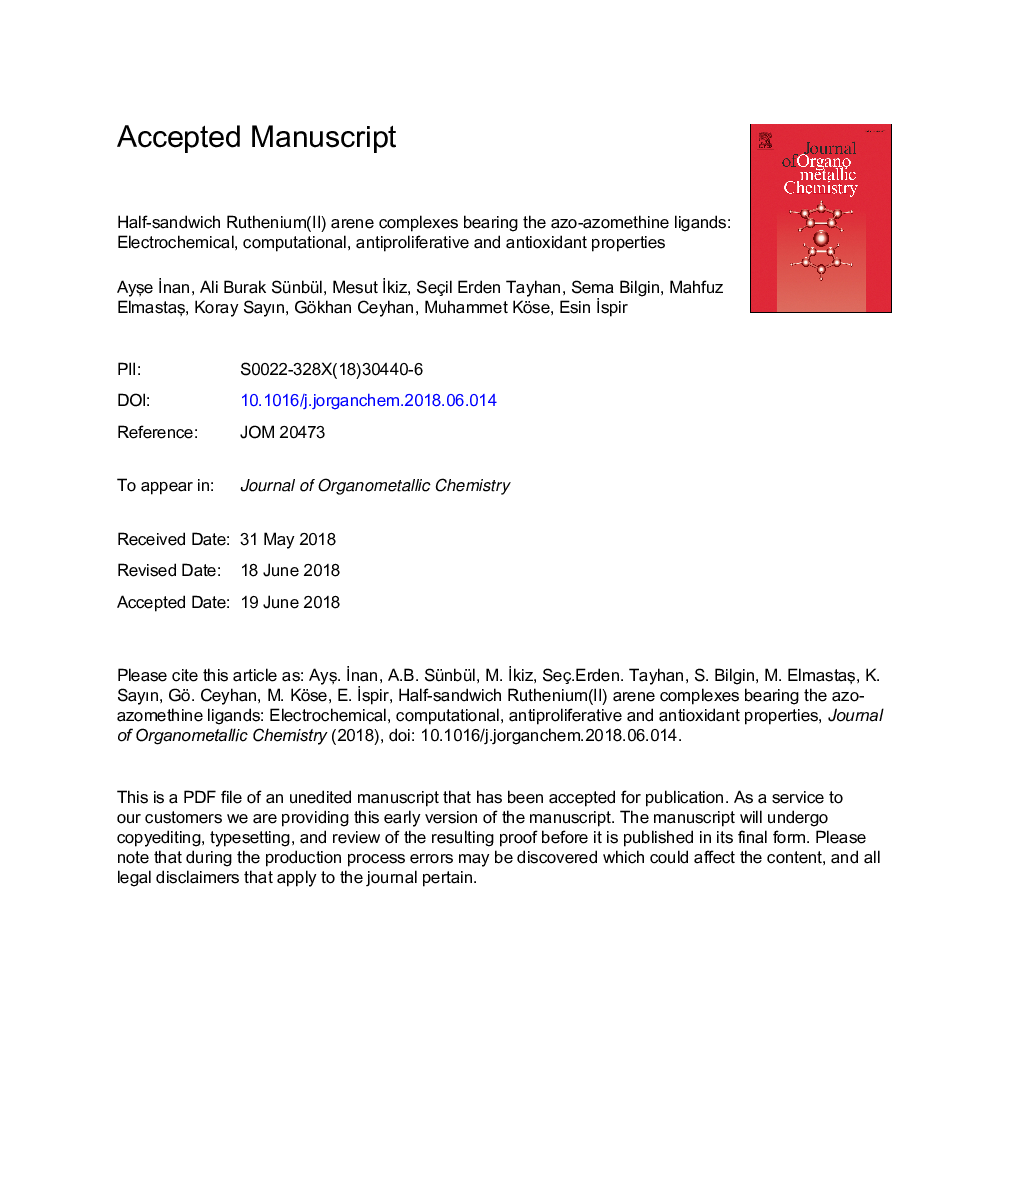 Half-sandwich Ruthenium(II) arene complexes bearing the azo-azomethine ligands: Electrochemical, computational, antiproliferative and antioxidant properties